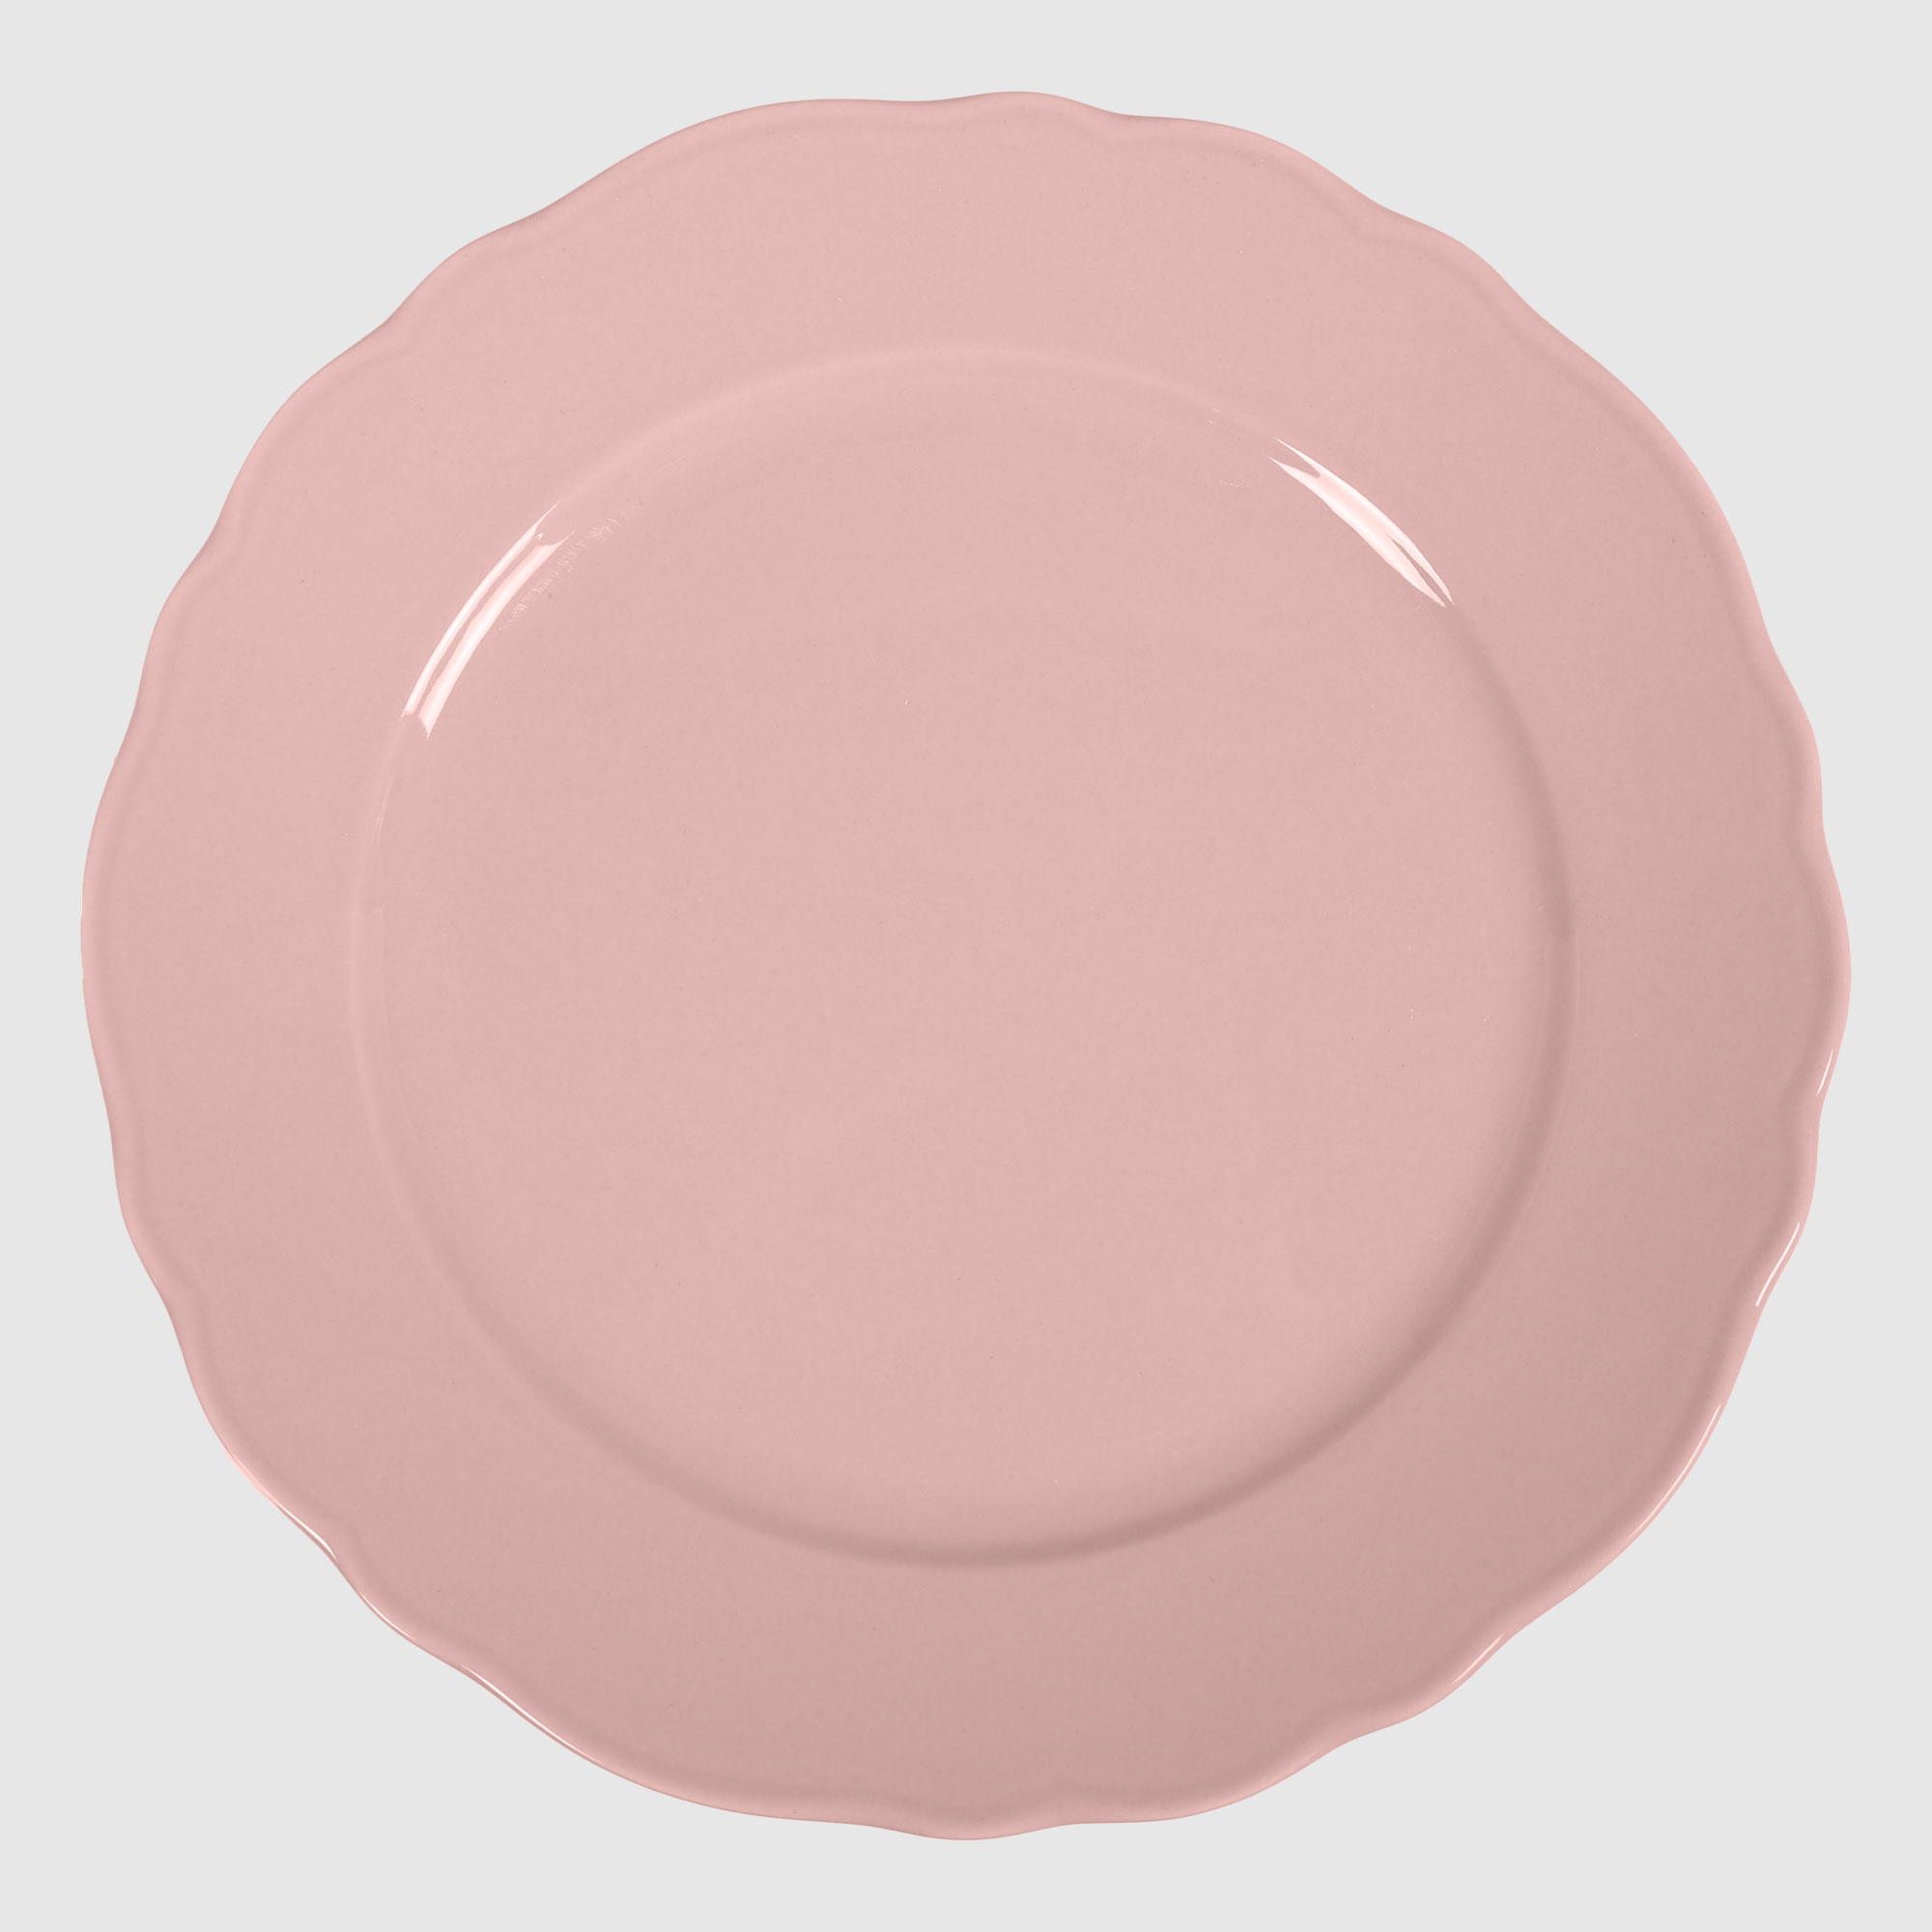 Тарелка Kutahya porselen Lar розовая 26 см беговая тарелка carno для грызунов 18 х 18 х 11 см розовая